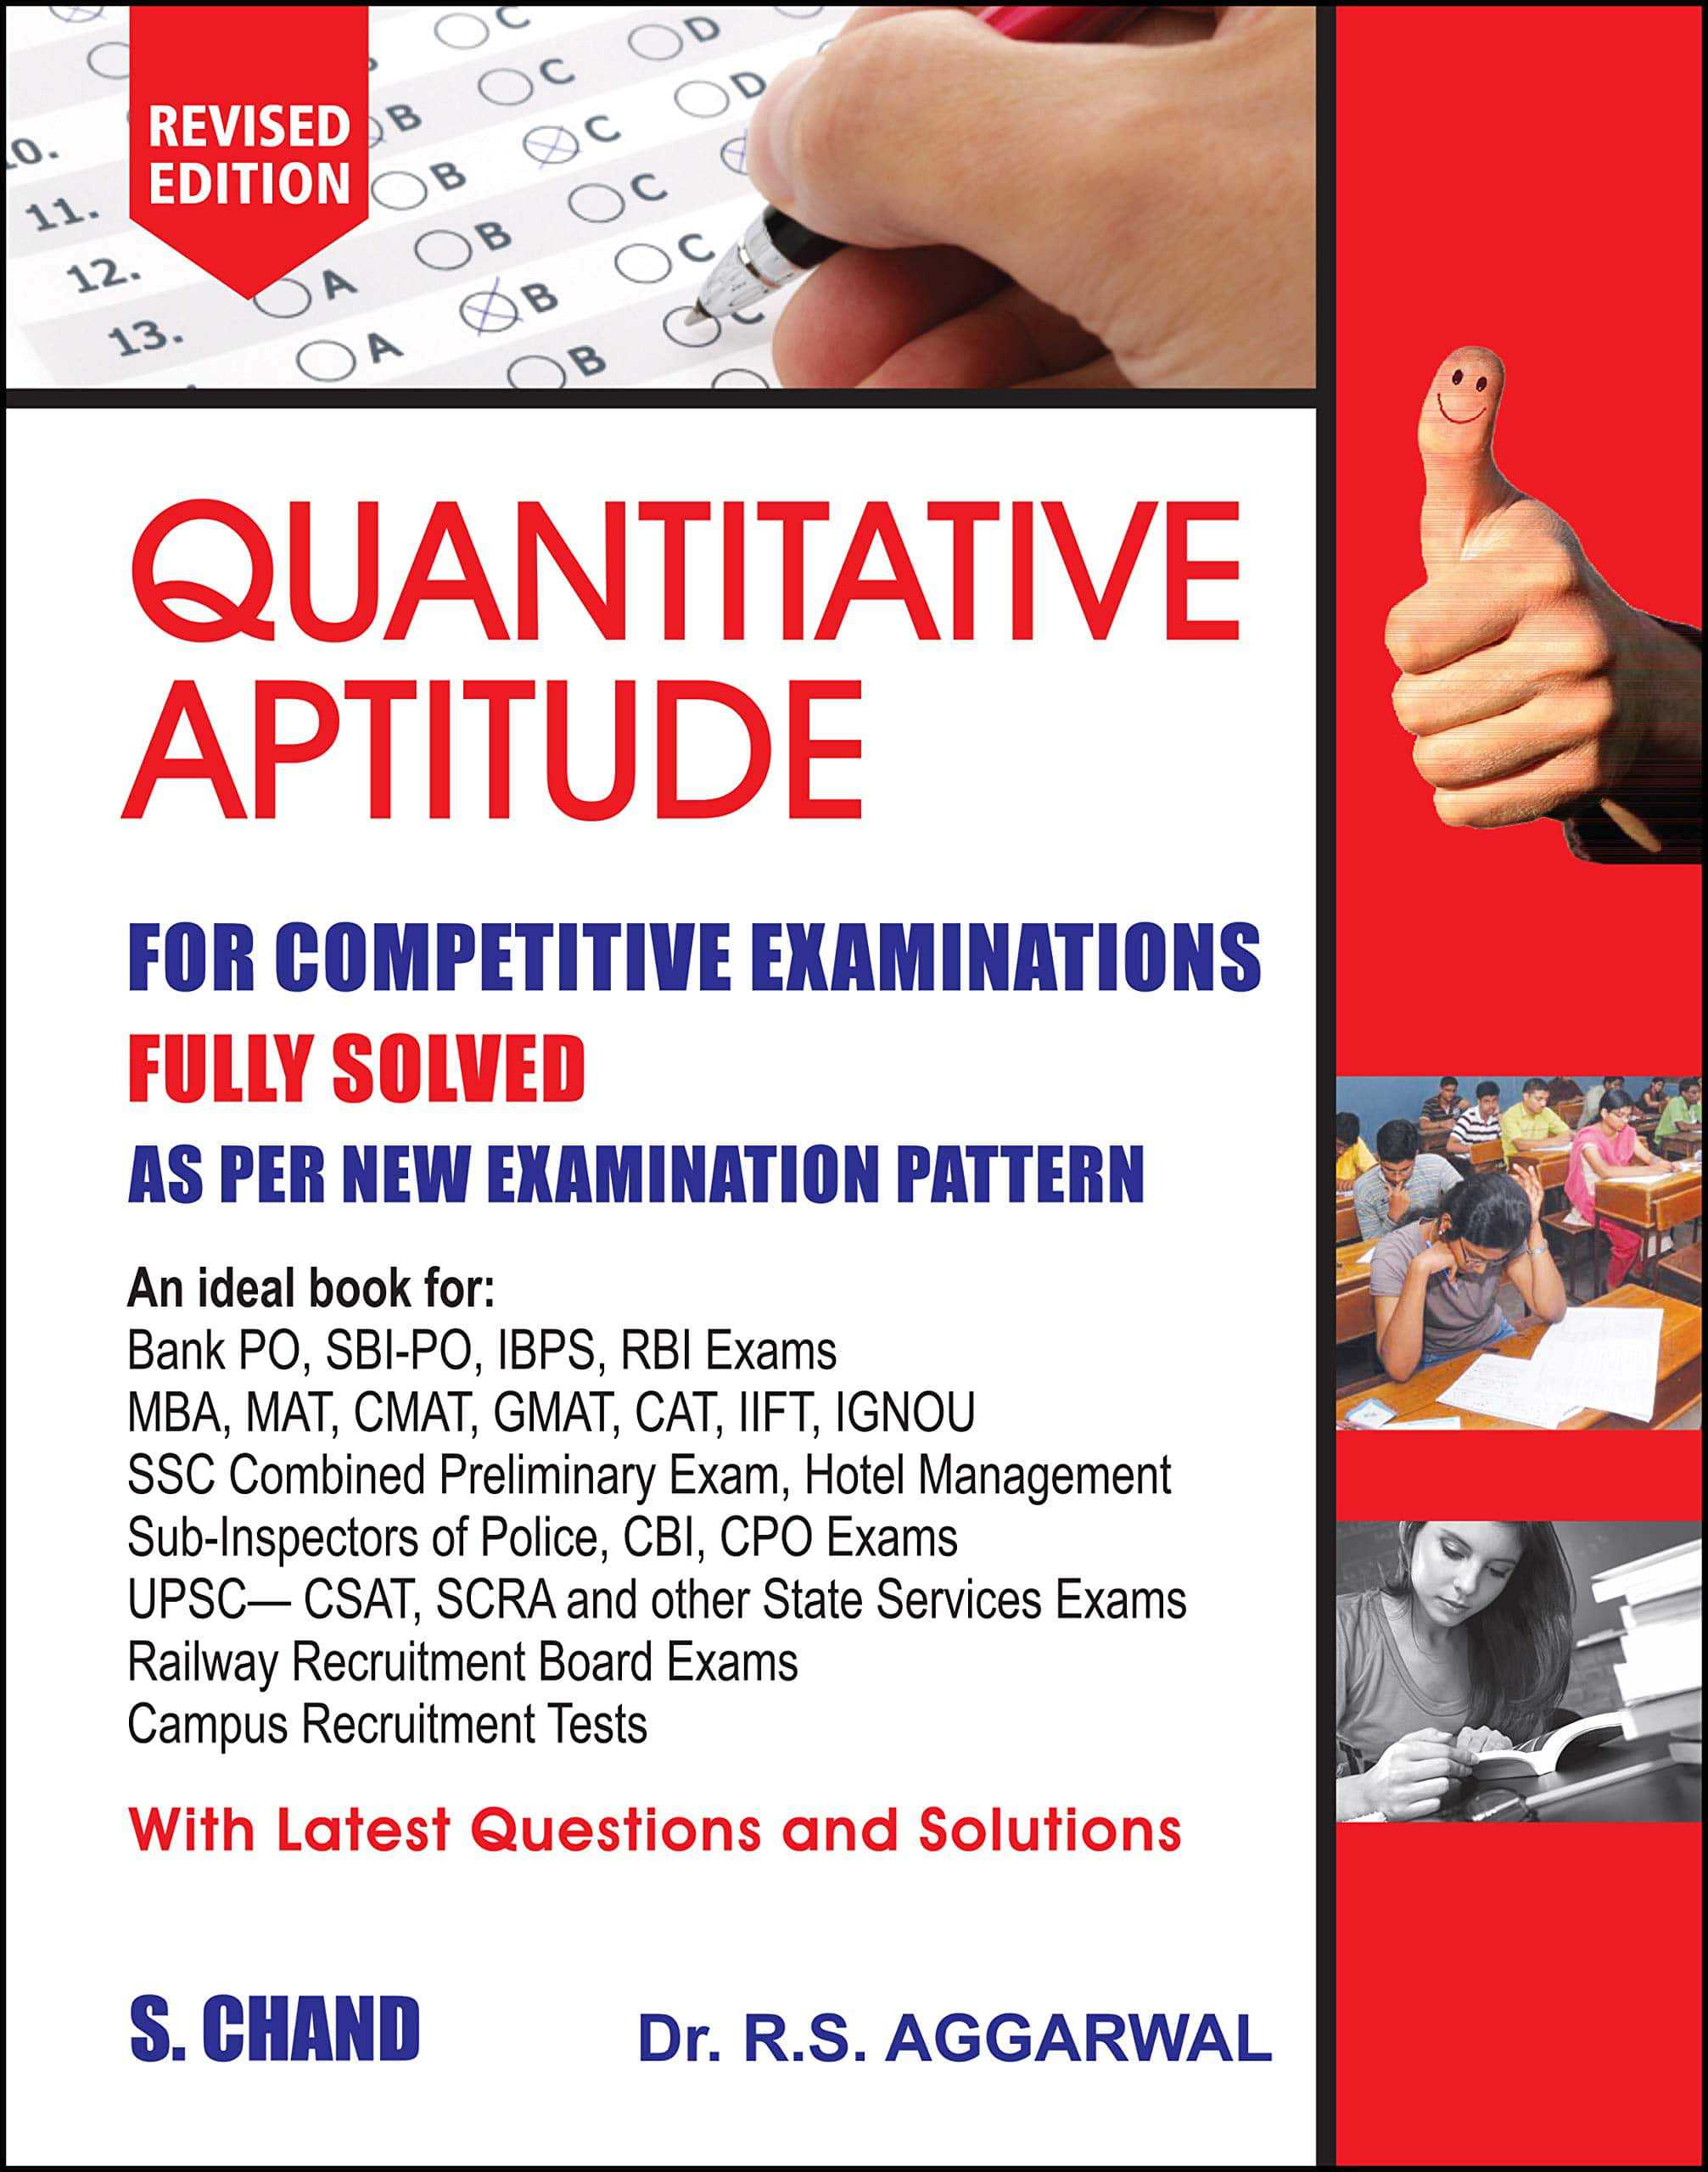 RS Aggarwal Quantitative Aptitude Book Review Buying Guide